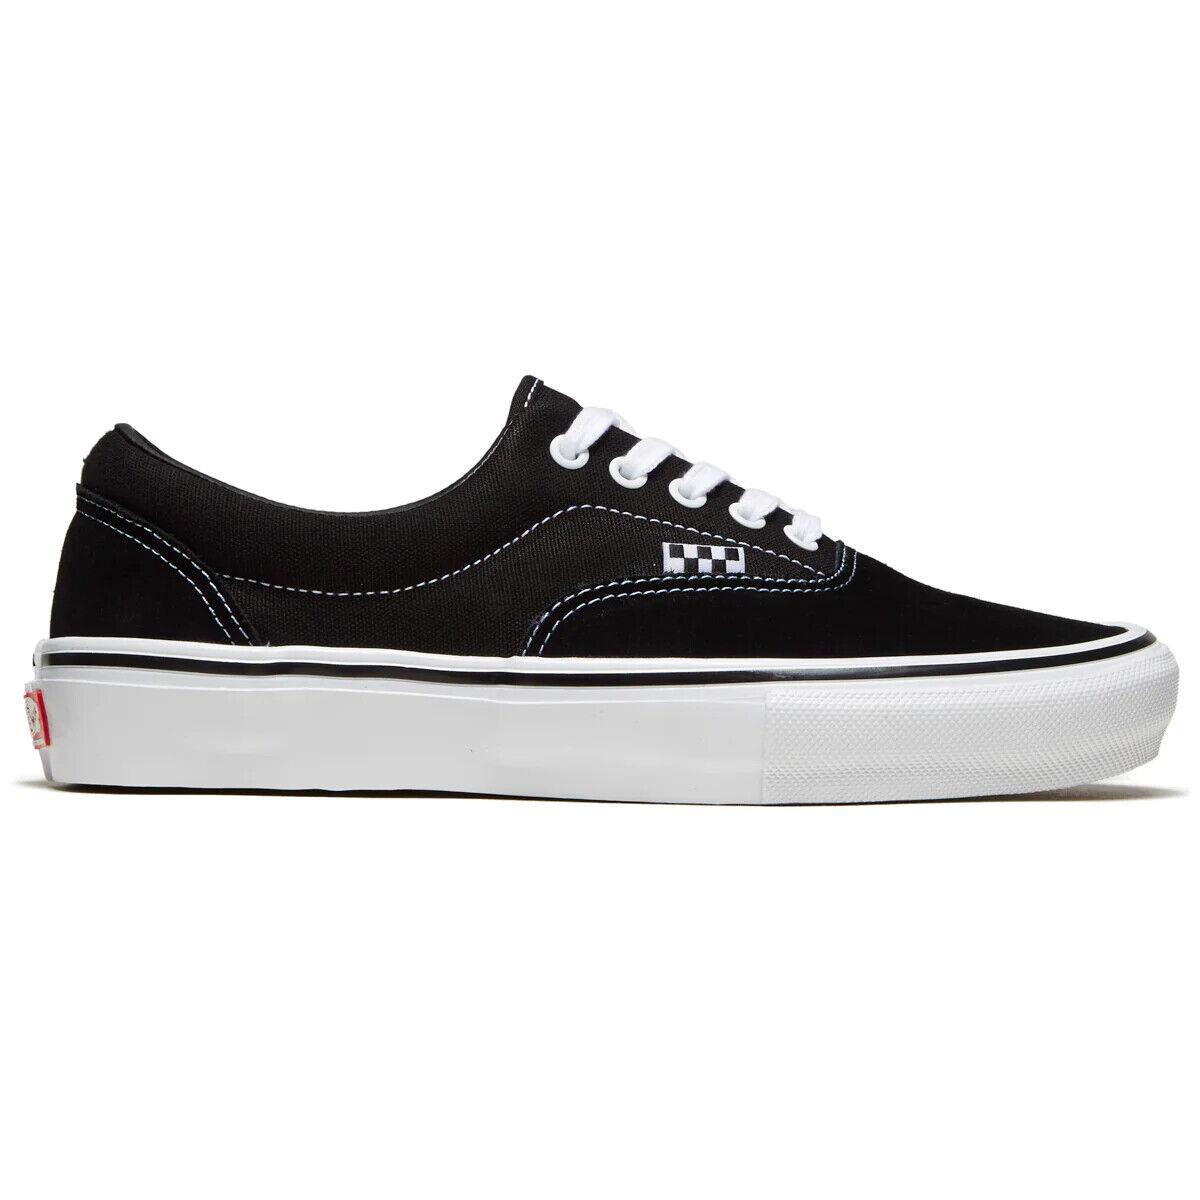 Vans Skate Era Skate Boarding Casual Shoes Black White VN0A5FC9Y28 - Black / White